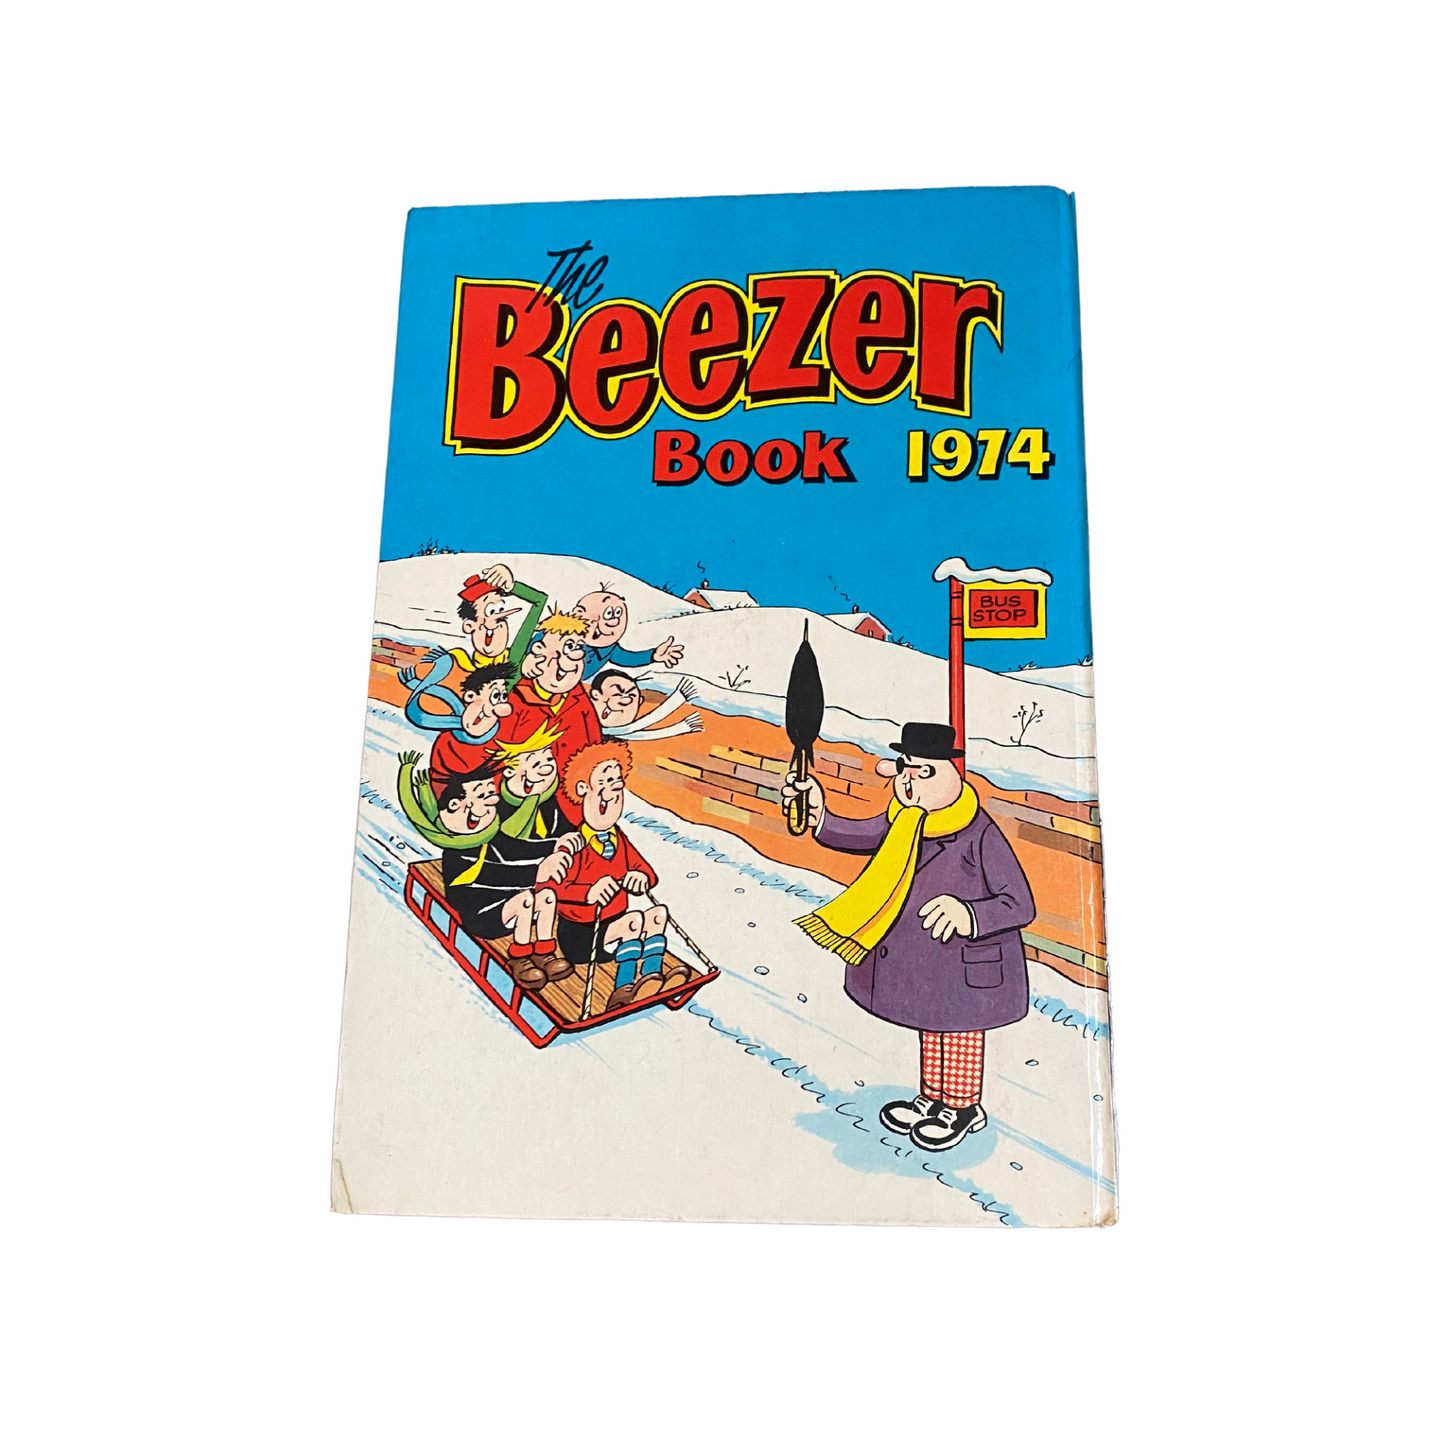 Vintage Beezer annual 1974. Great nostalgic gift idea